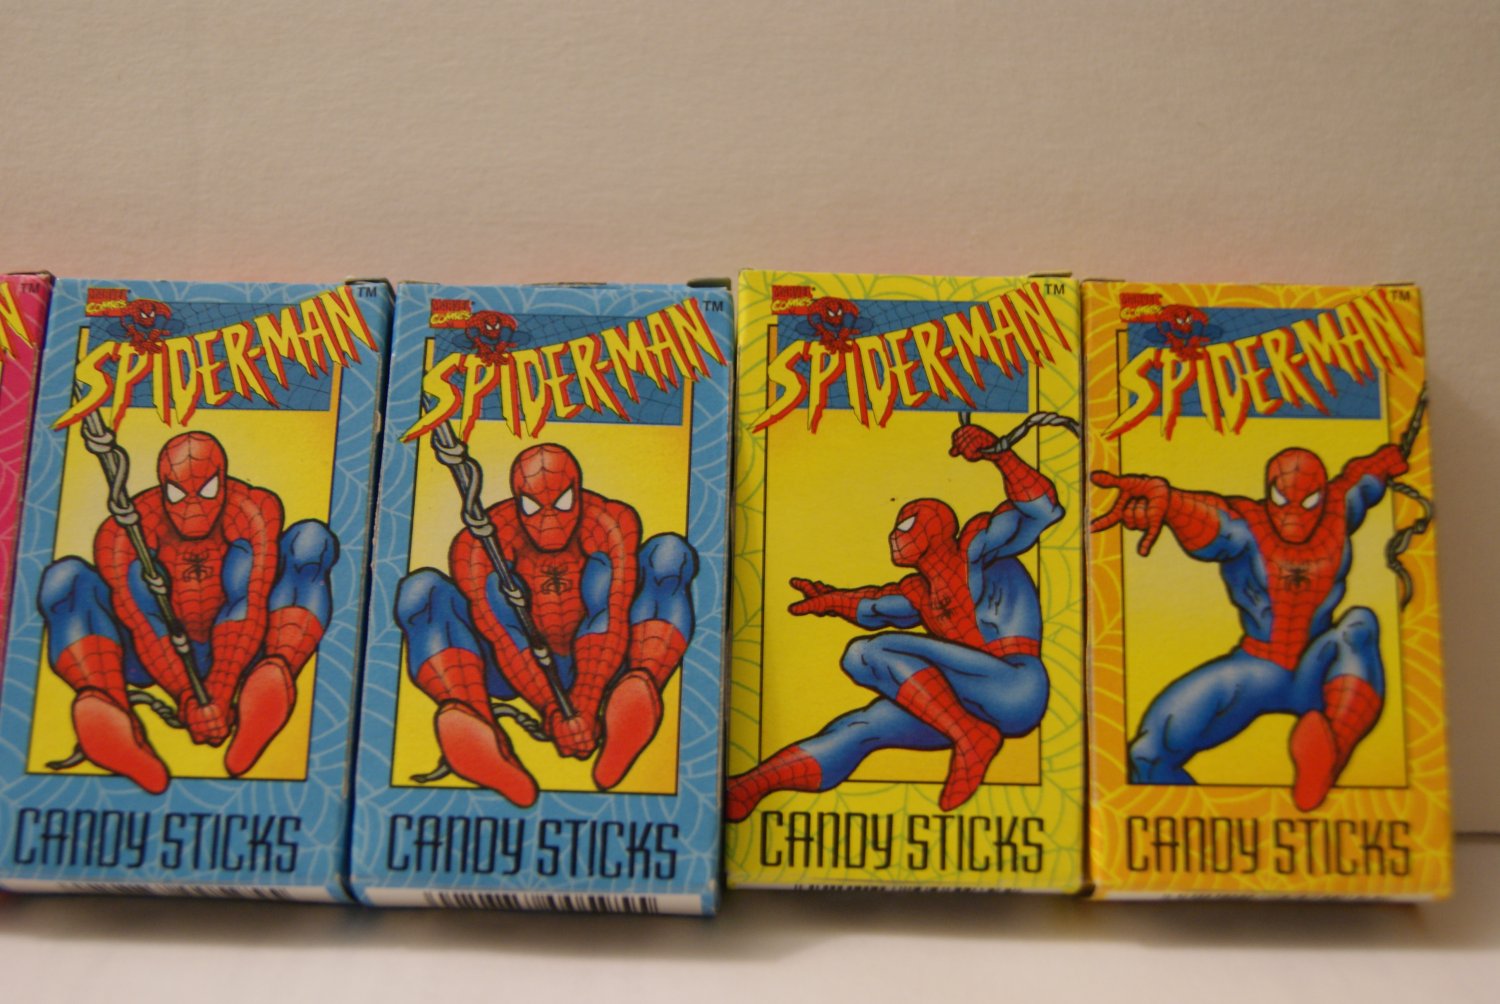 Spiderman Candy Sticks Cigarettes